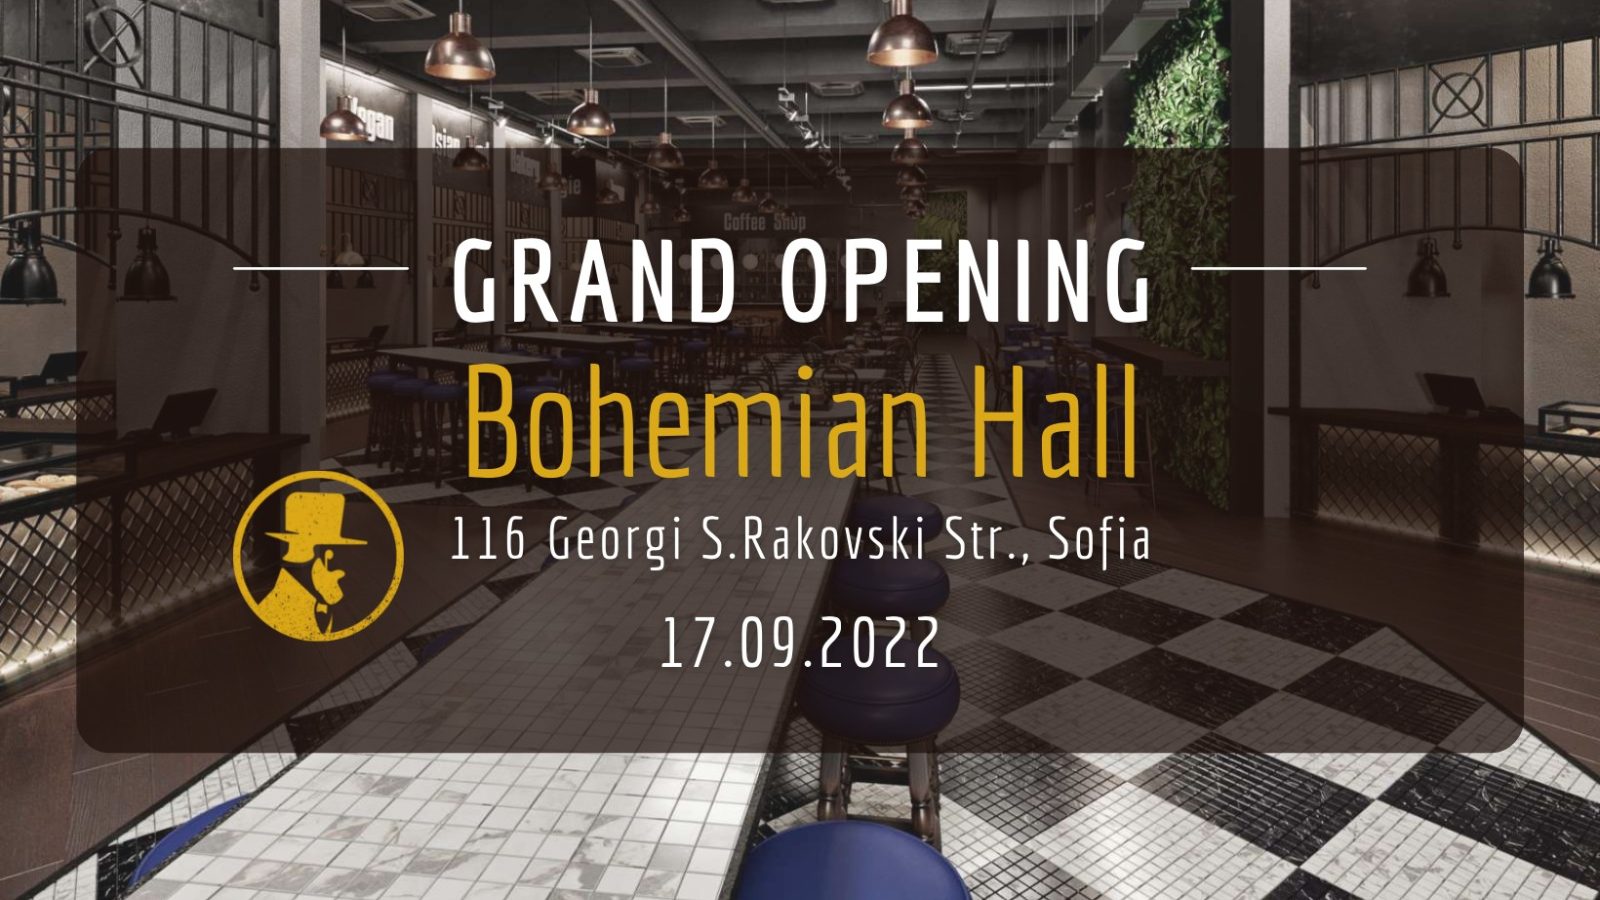 Bohemian Hall - Grand Opening